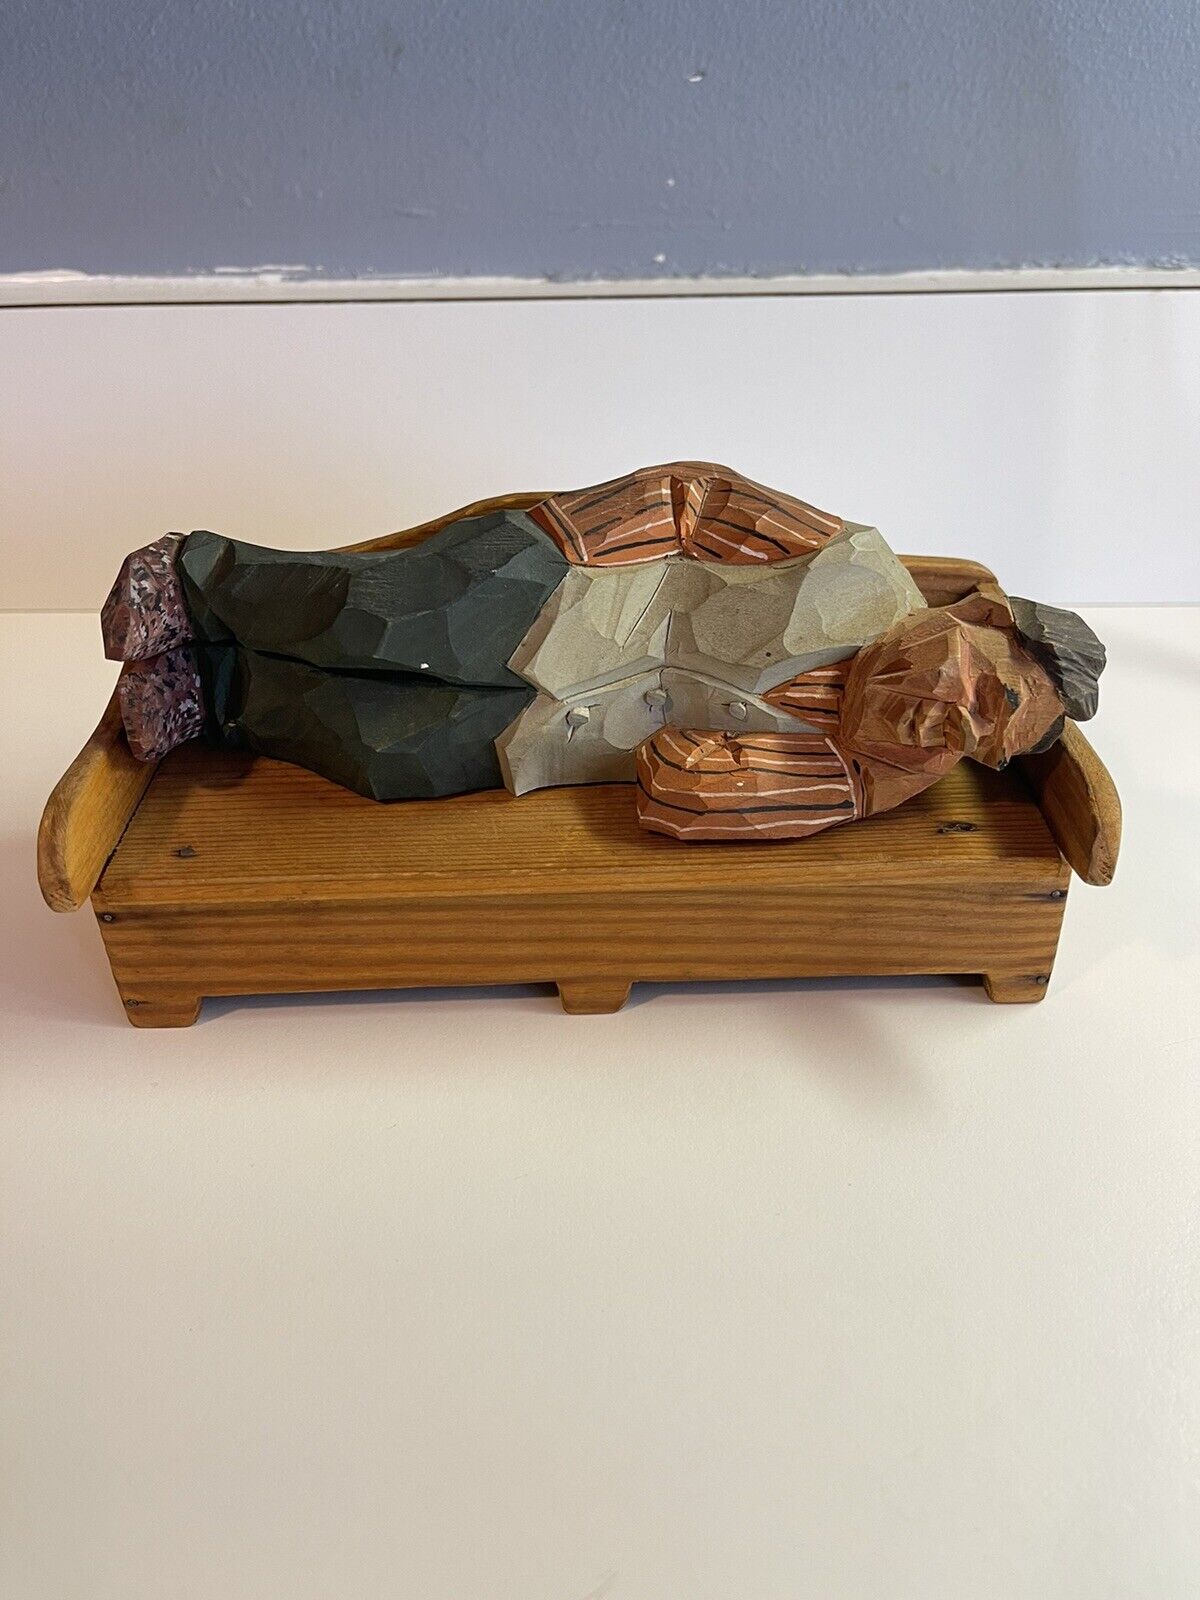 Rare~SIGNED GUNNARSSON Swedish Carved -Hand Painted Wood Figure Sleeping Man-